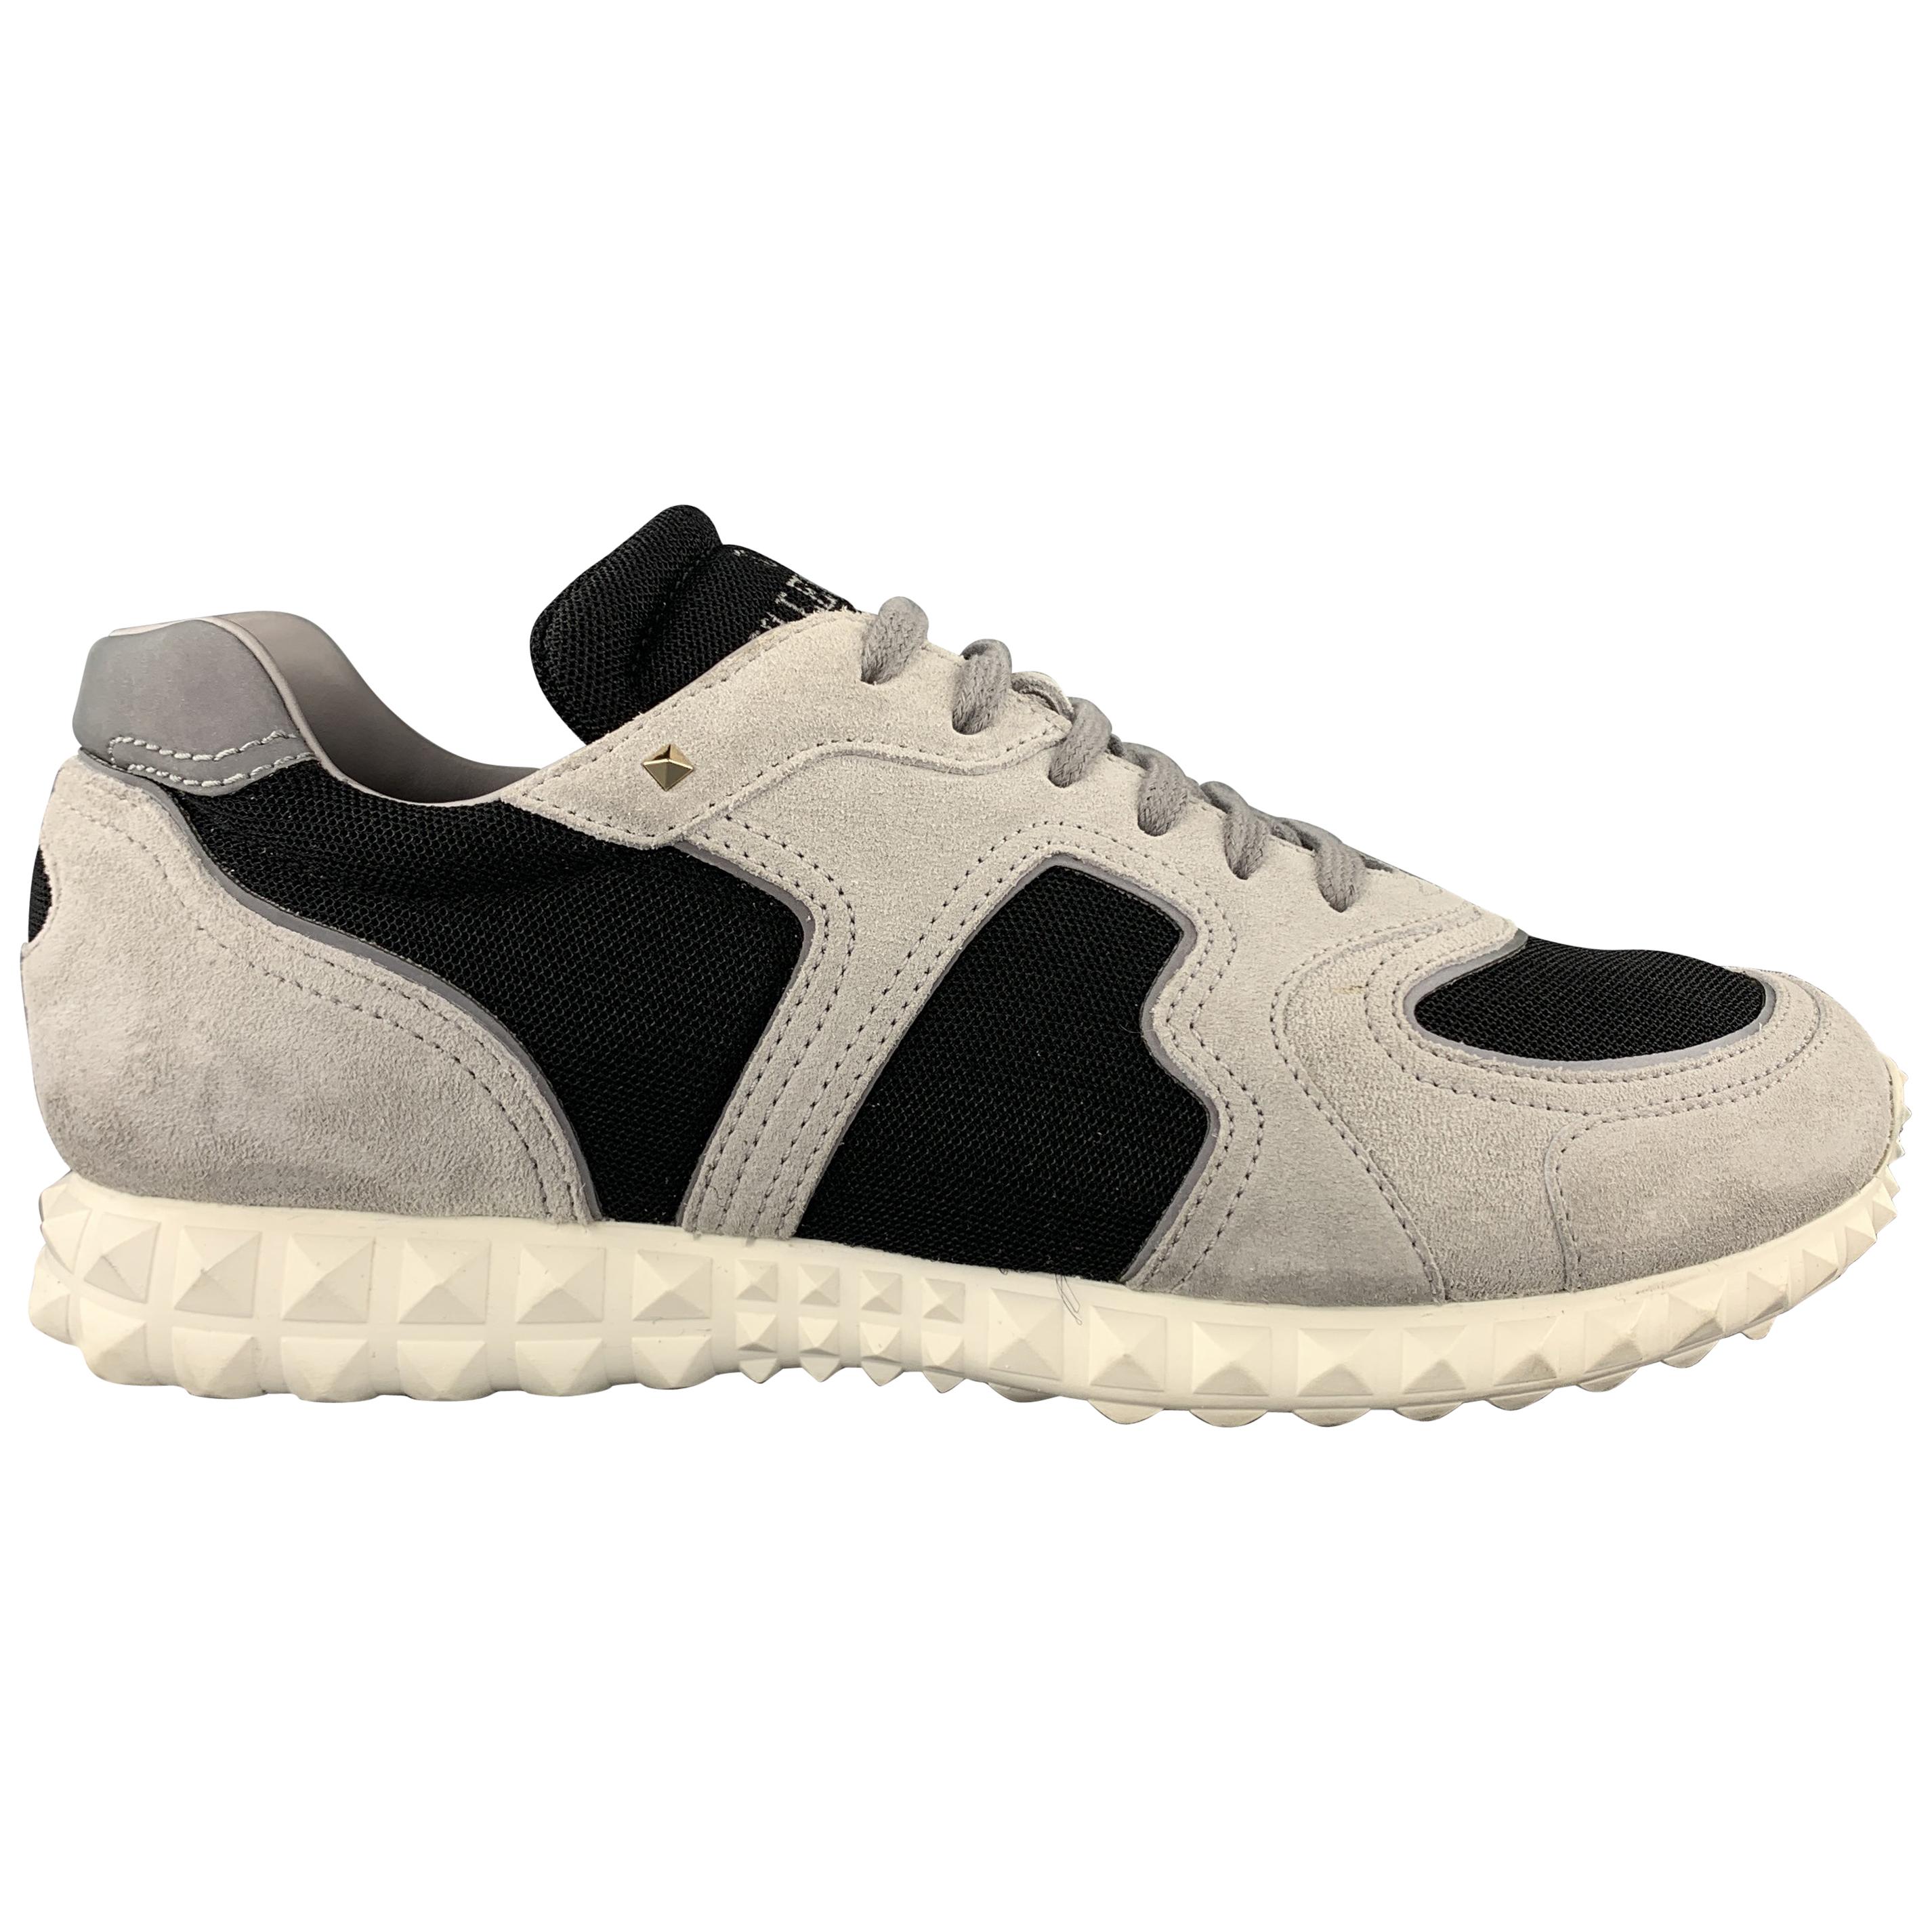 VALENTINO Size 9.5 Gray & Black Suede Reflective Rockstud Sneakers